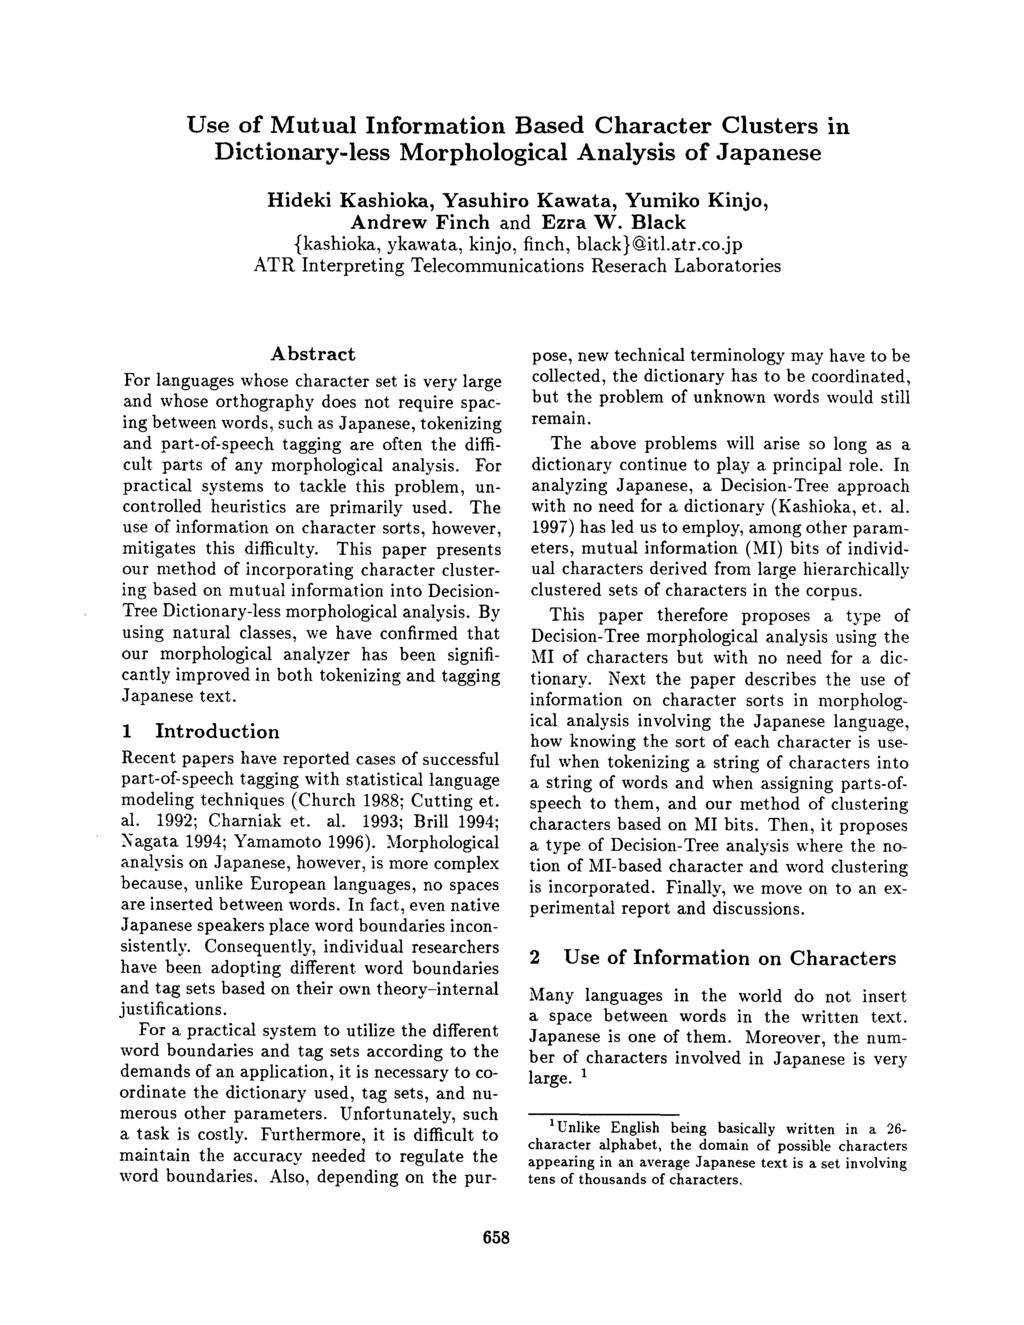 Use of Mutual Information Based Character Clusters in Dictionary-less Morphological Analysis of Japanese Hideki Kashioka, Yasuhiro Kawata, Yumiko Kinjo, Andrew Finch and Ezra W.